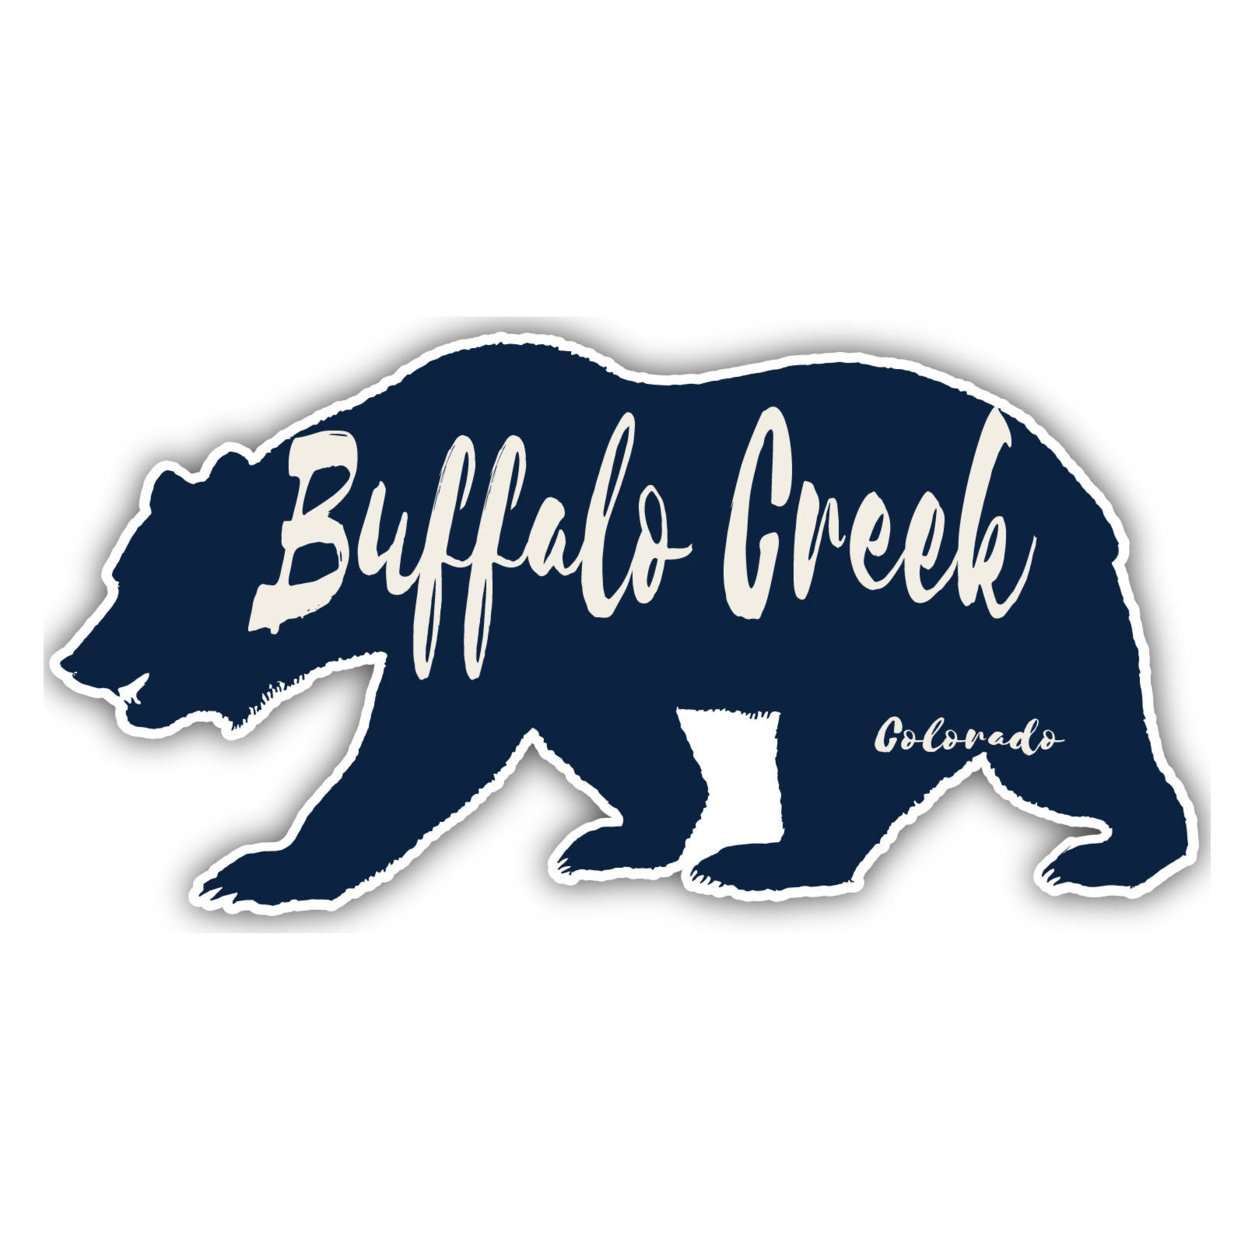 Buffalo Creek Colorado Souvenir Decorative Stickers (Choose Theme And Size) - 4-Pack, 8-Inch, Bear